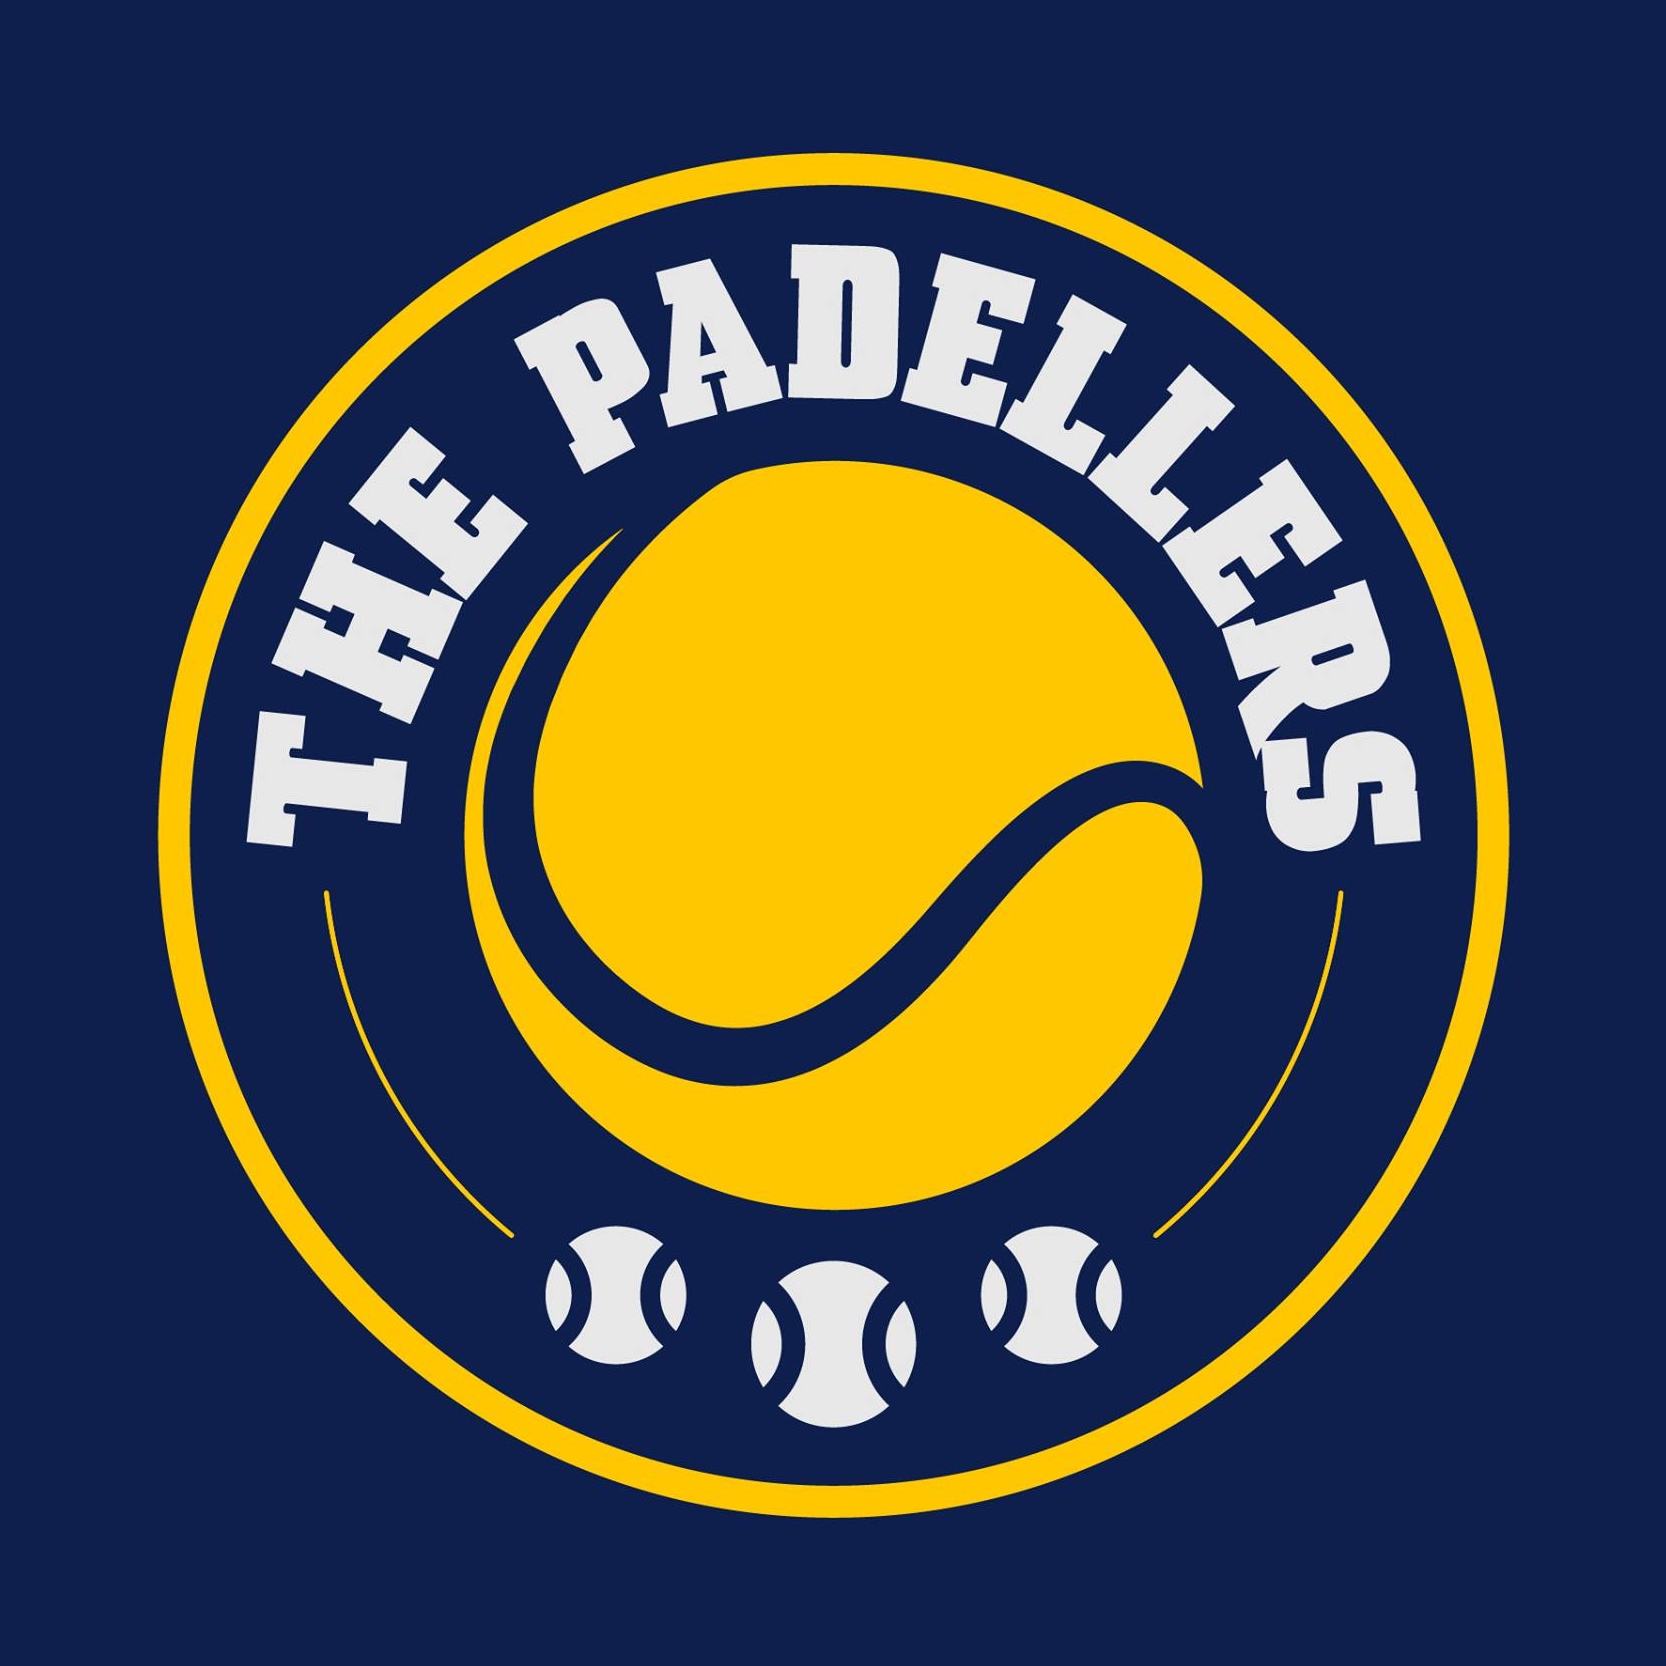 Profile image of venue The Padellers - Geleen